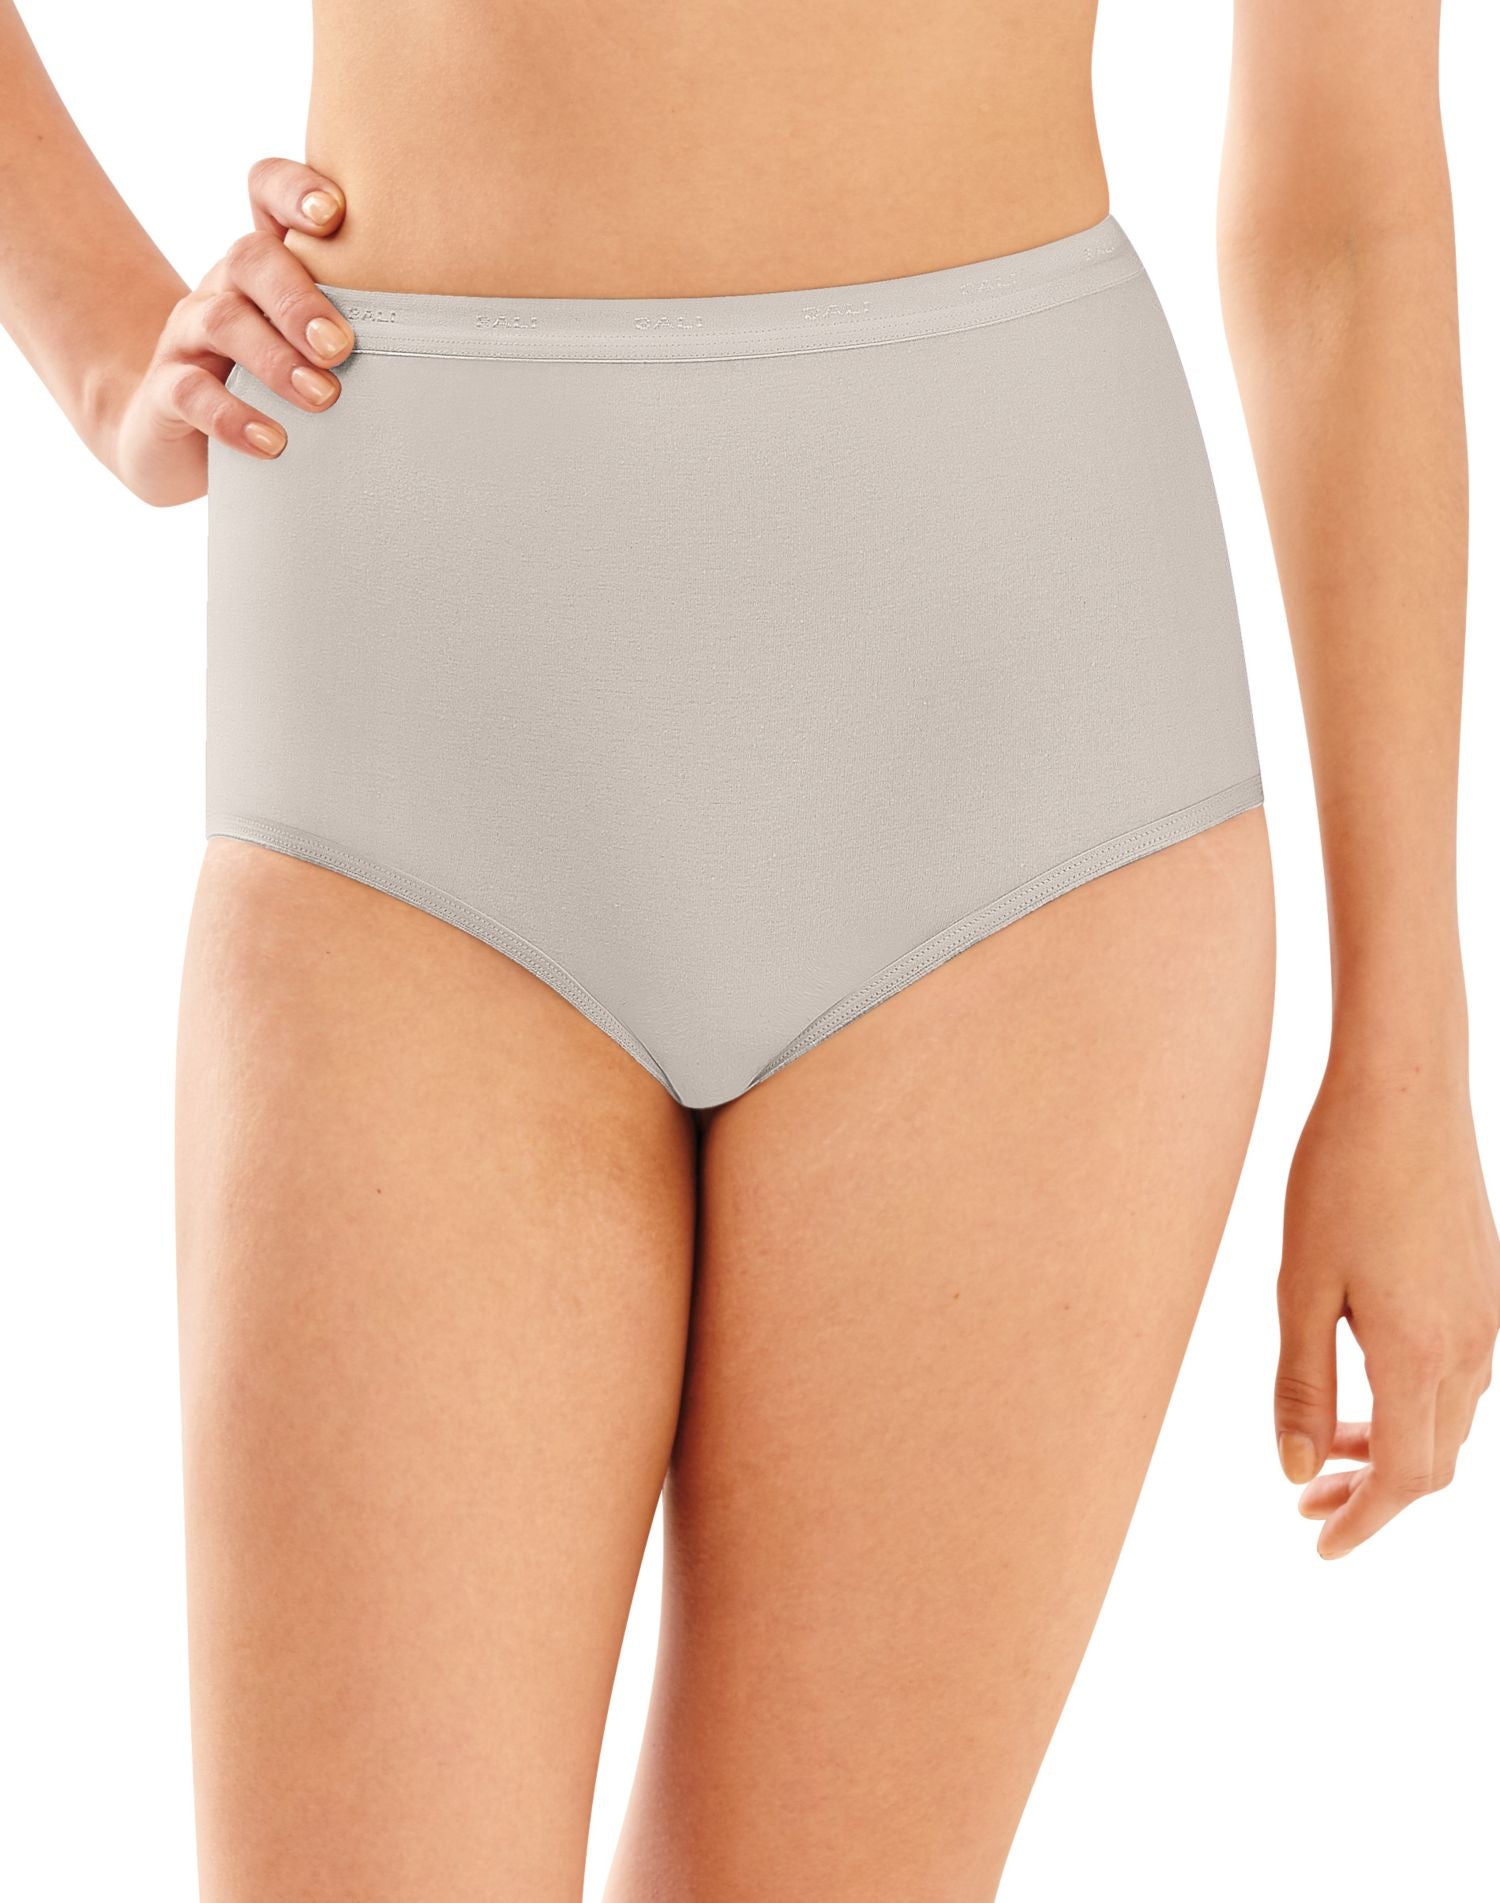 Womens Pink Nylon/Spandex Shapewear Panty Brief Light Shaping (8X/46) NEW 